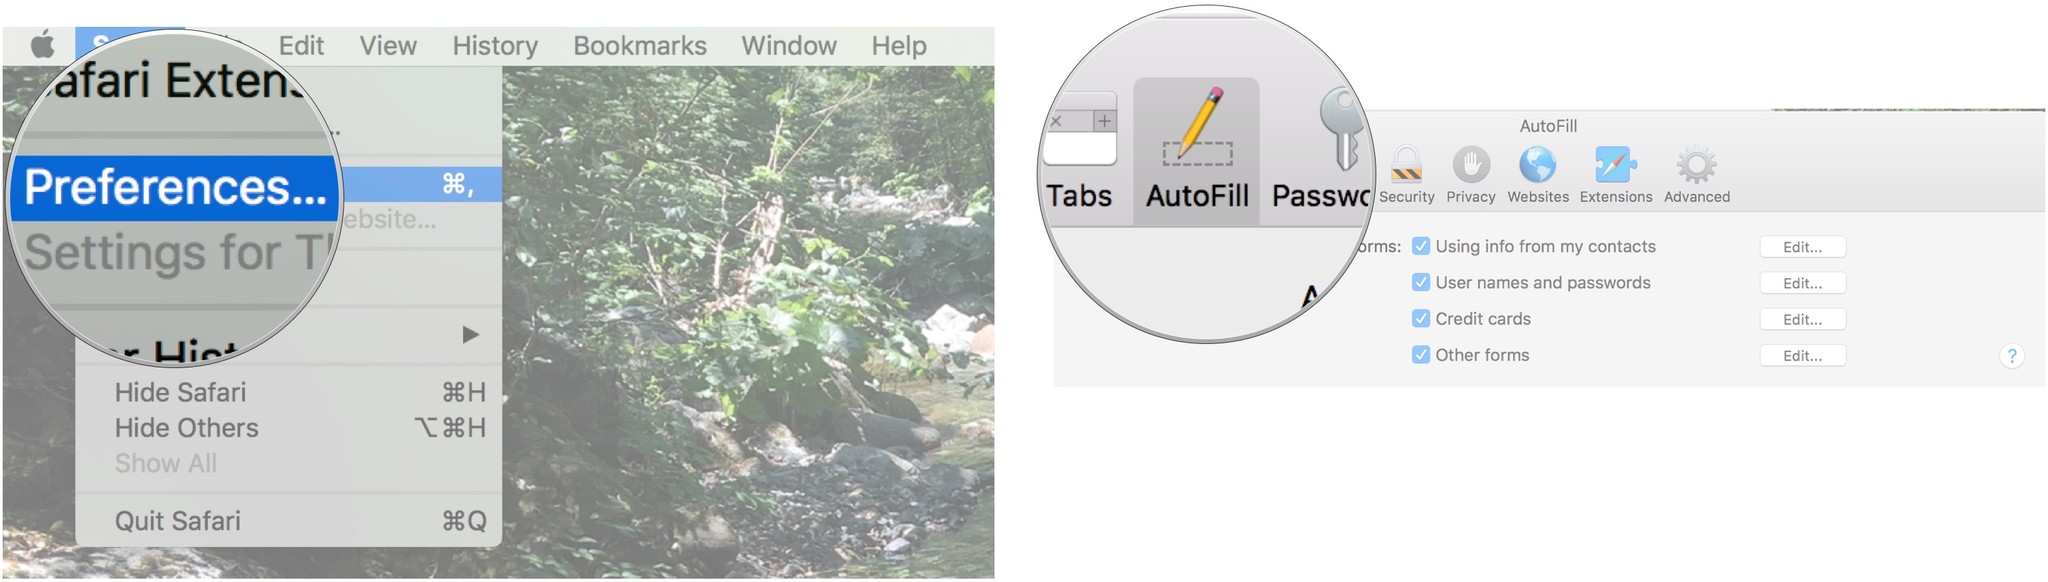 Select Preferences from the Safari app menu, then select Autofill